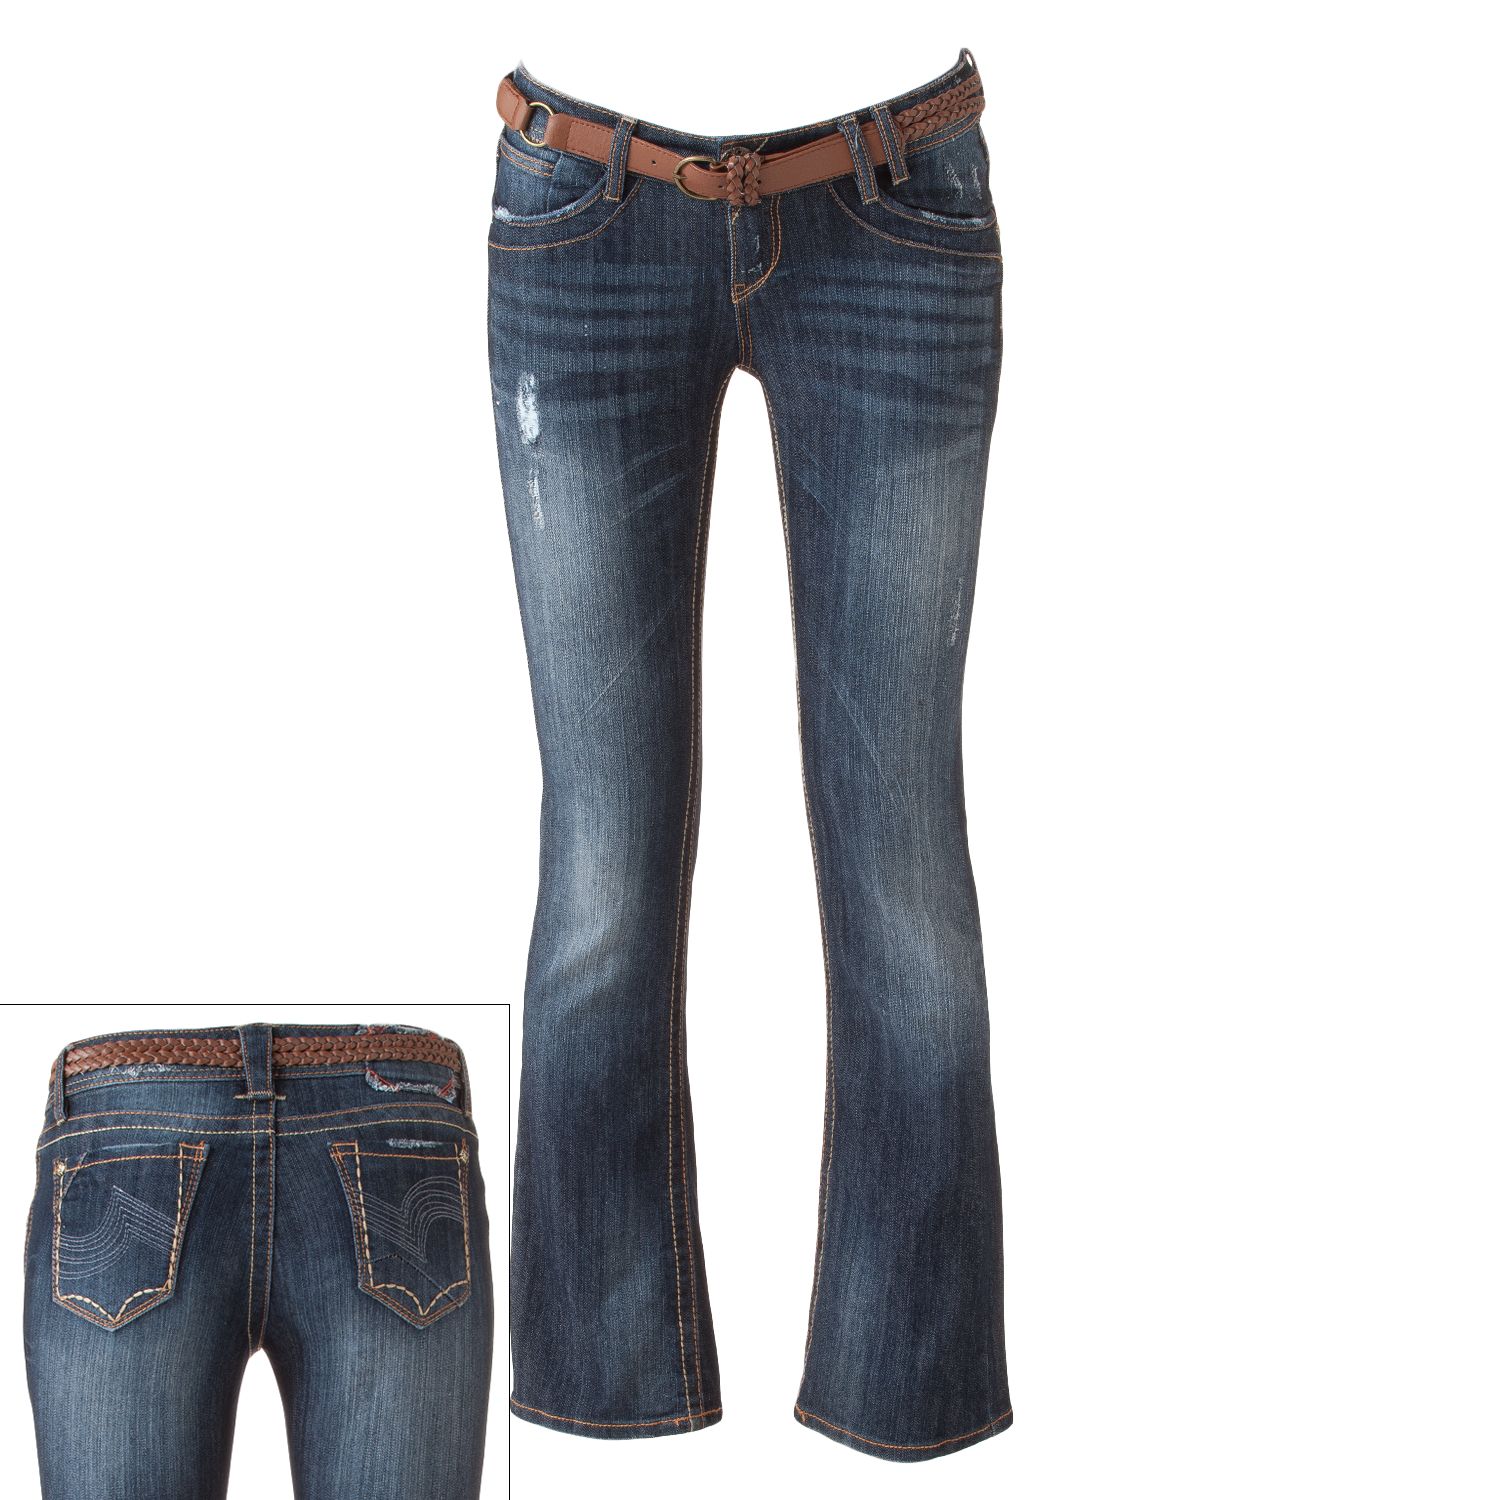 unionbay jeans juniors